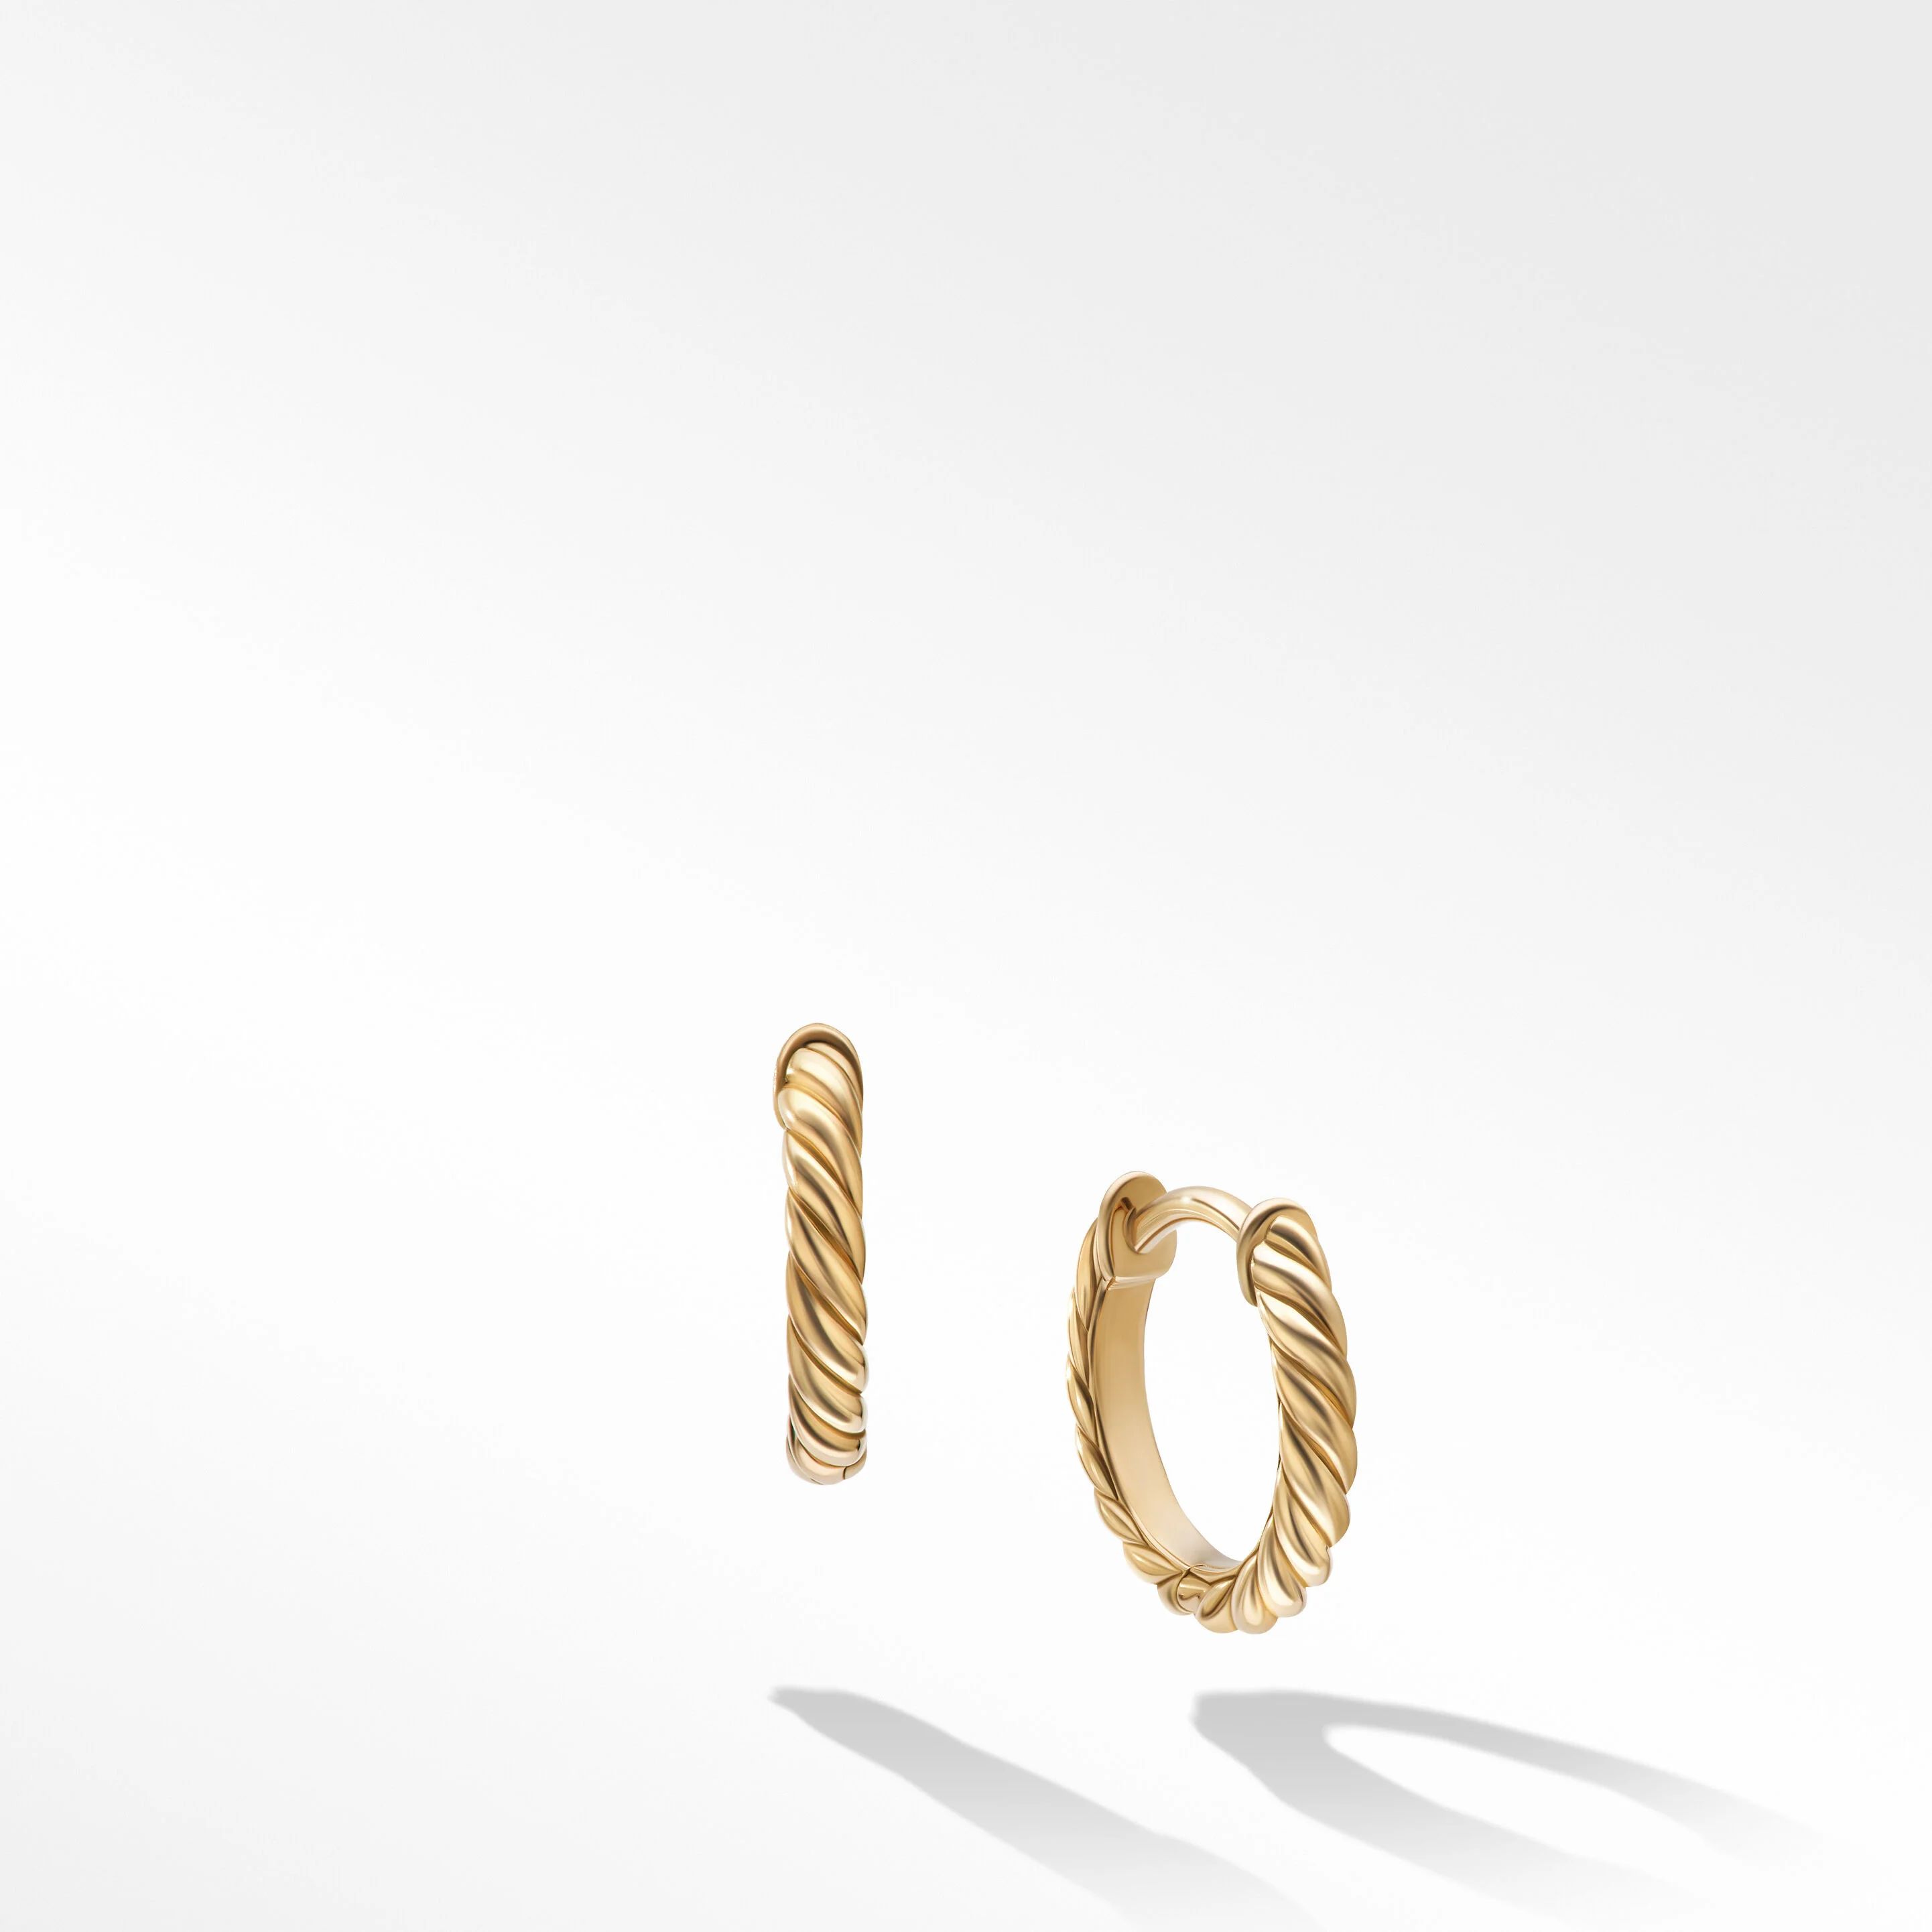 David Yurman | Sculpted Cable Huggie Hoop Earrings in 18K Yellow Gold | David Yurman